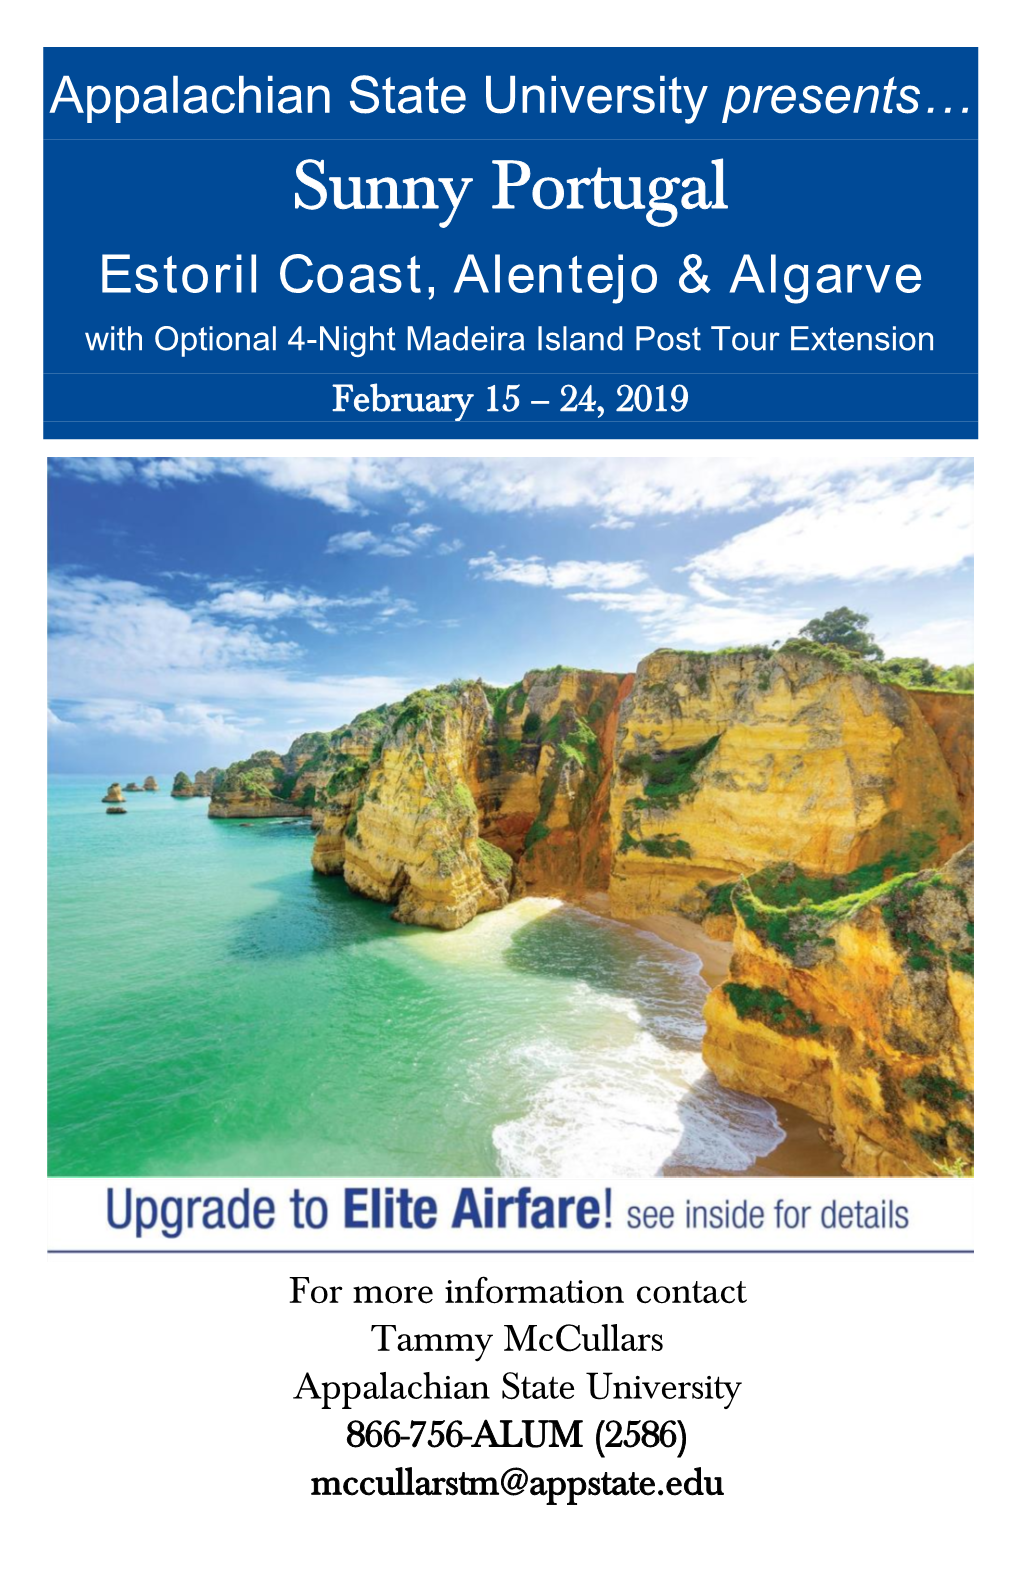 Sunny Portugal Estoril Coast, Alentejo & Algarve with Optional 4-Night Madeira Island Post Tour Extension February 15 – 24, 2019